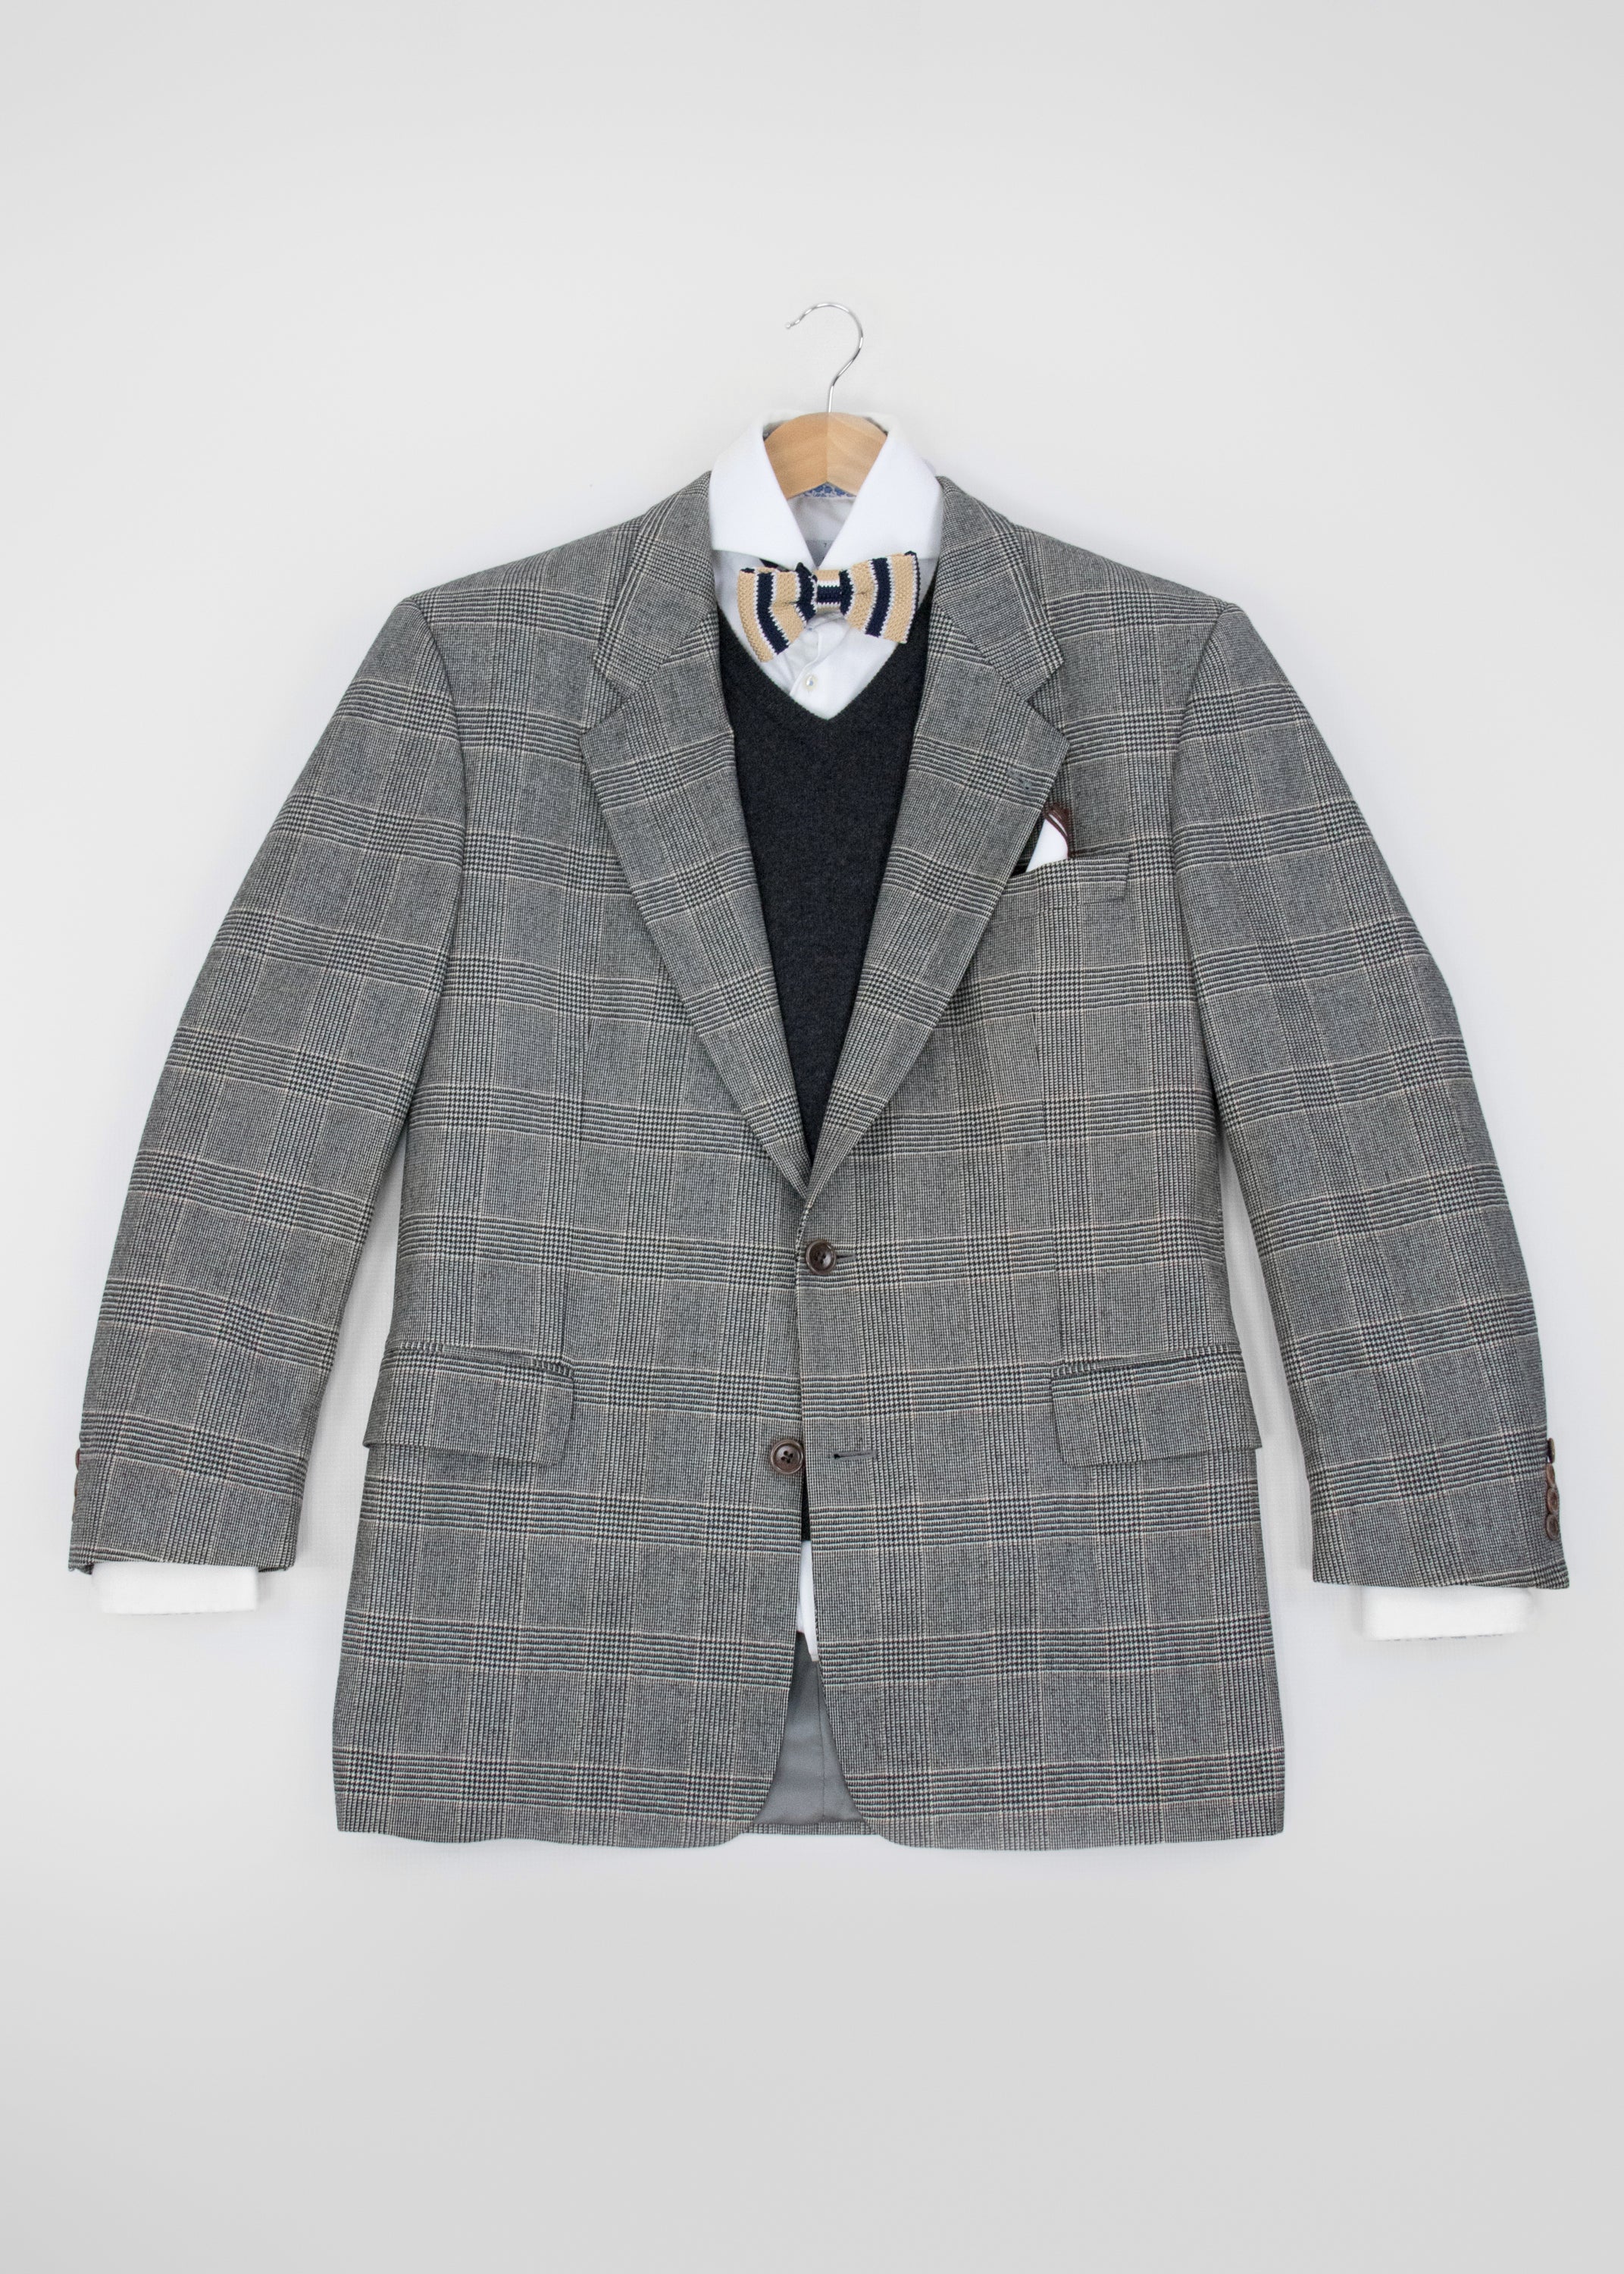 HUGO BOSS Blazer Jacket Of LORO PIANA Cashmere Wool US 44/EU 54 